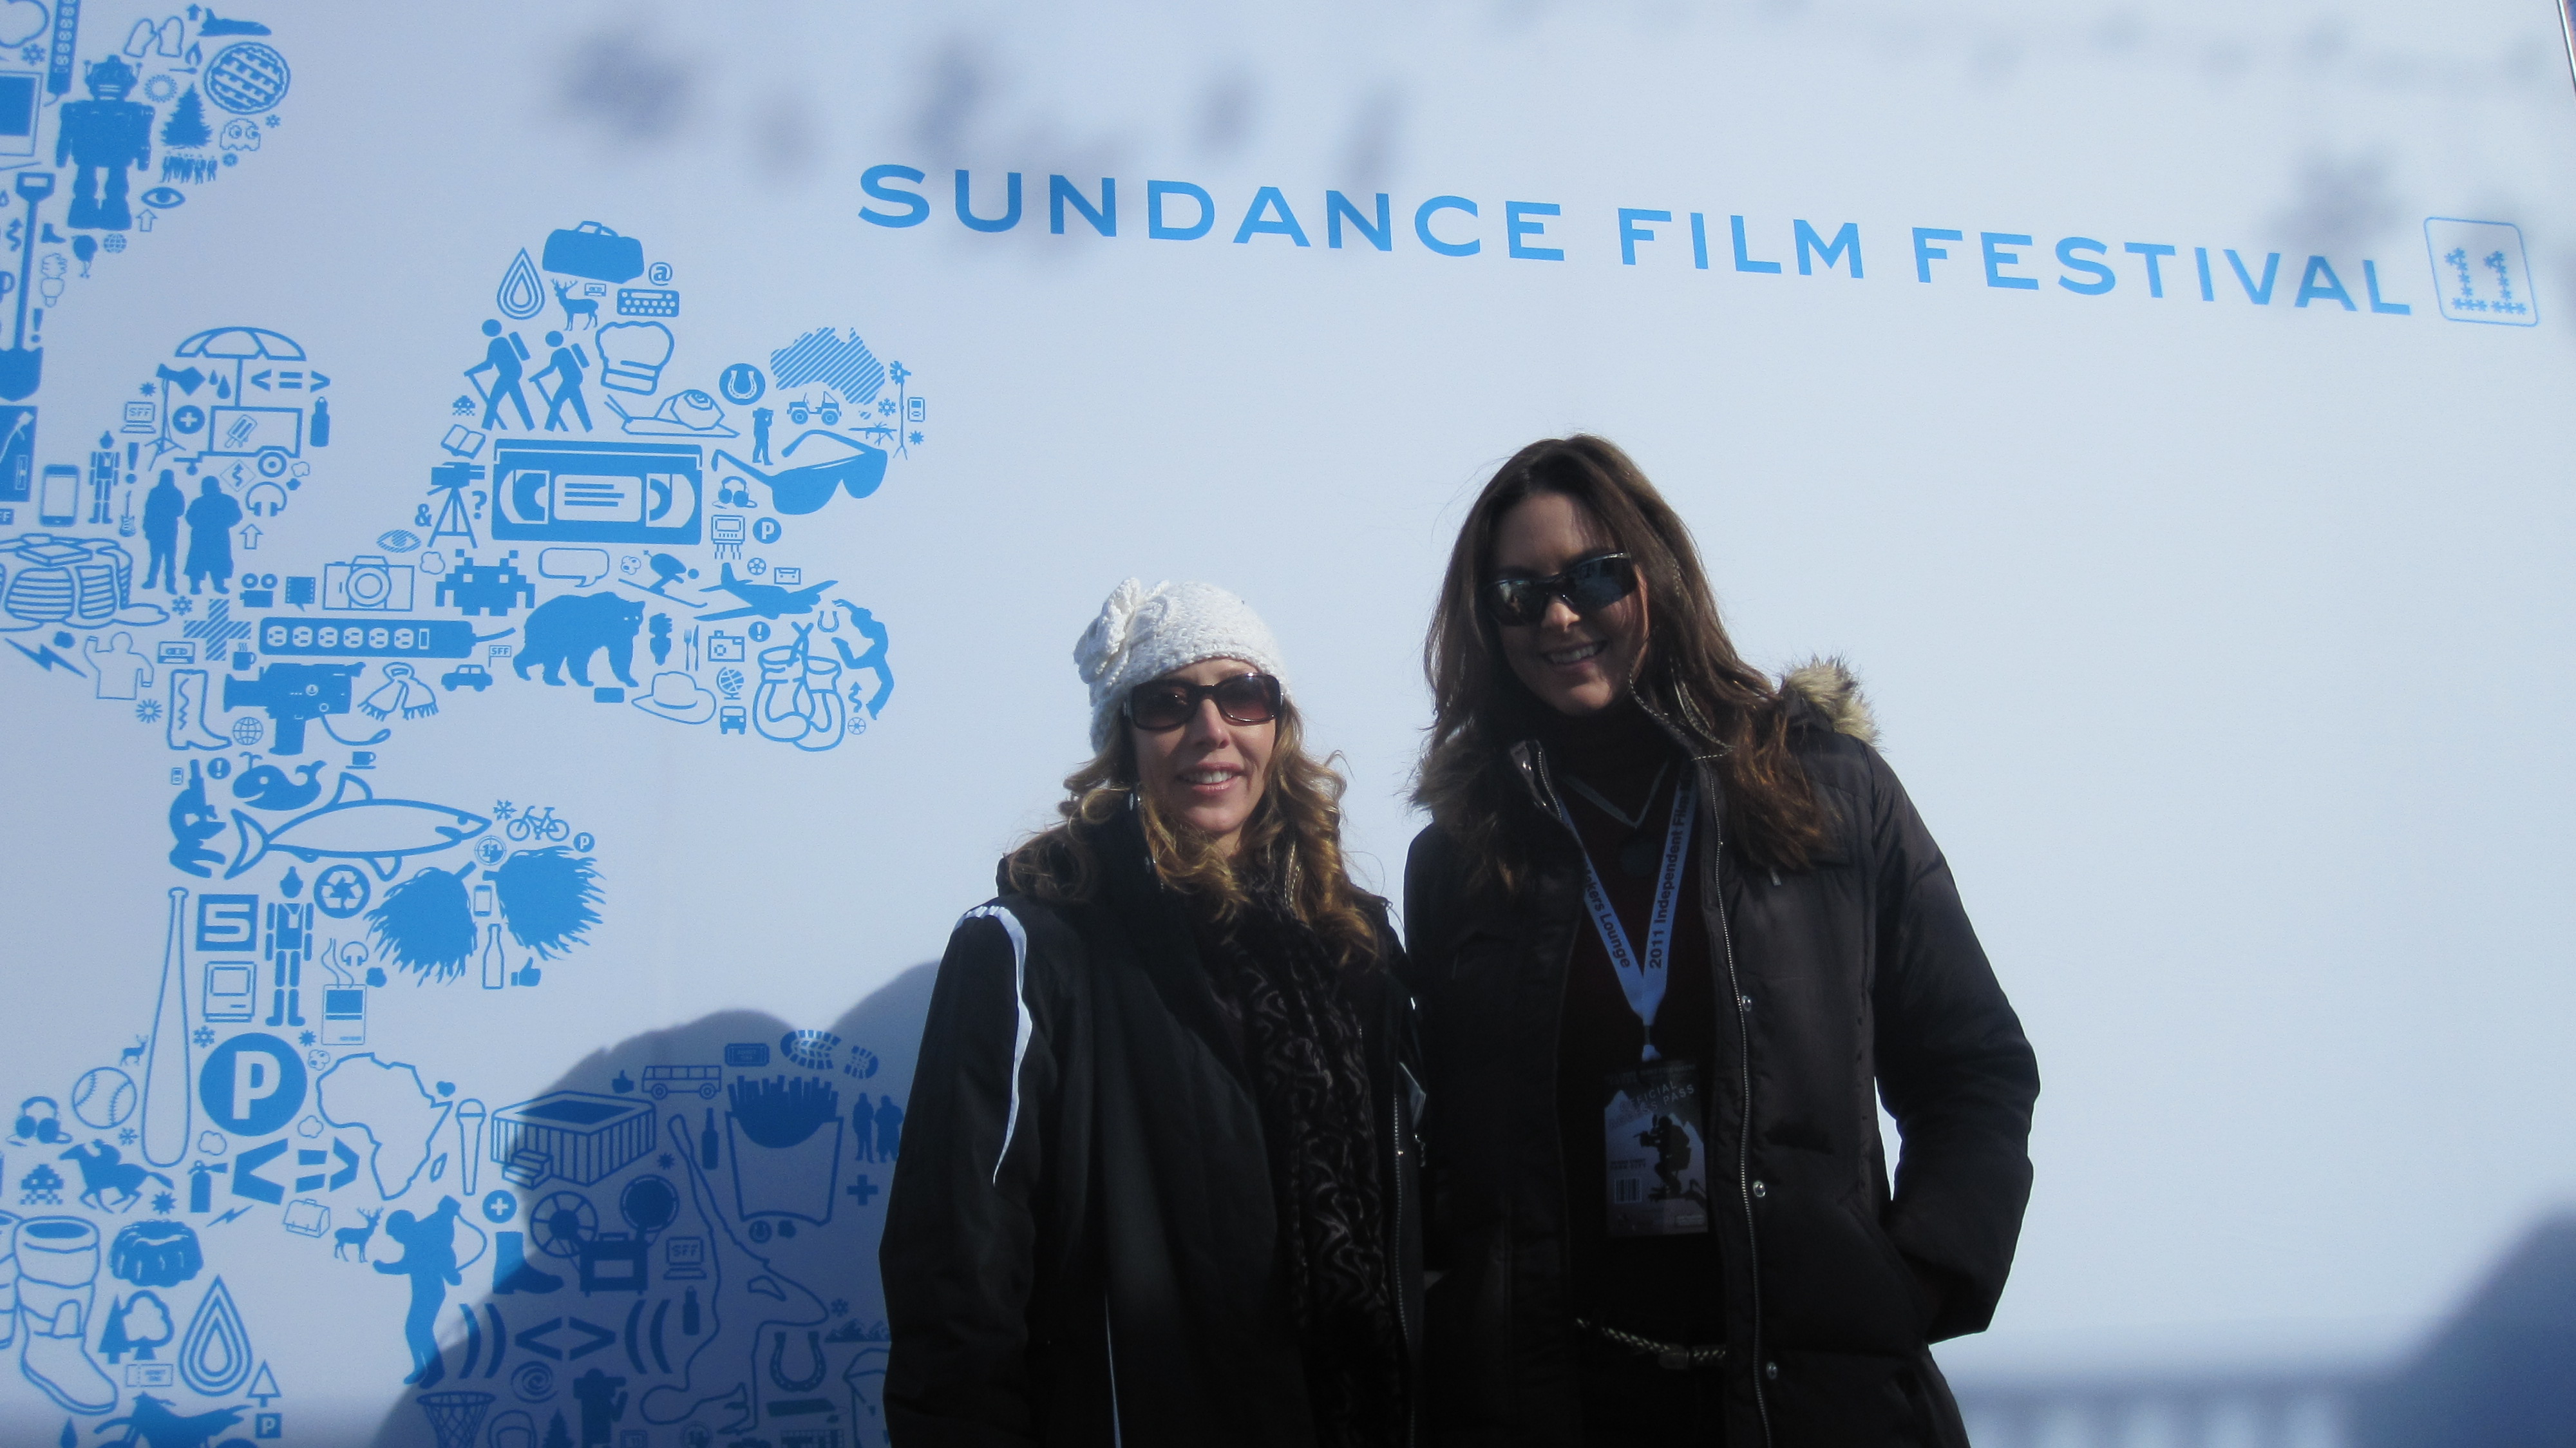 Sundance 2011